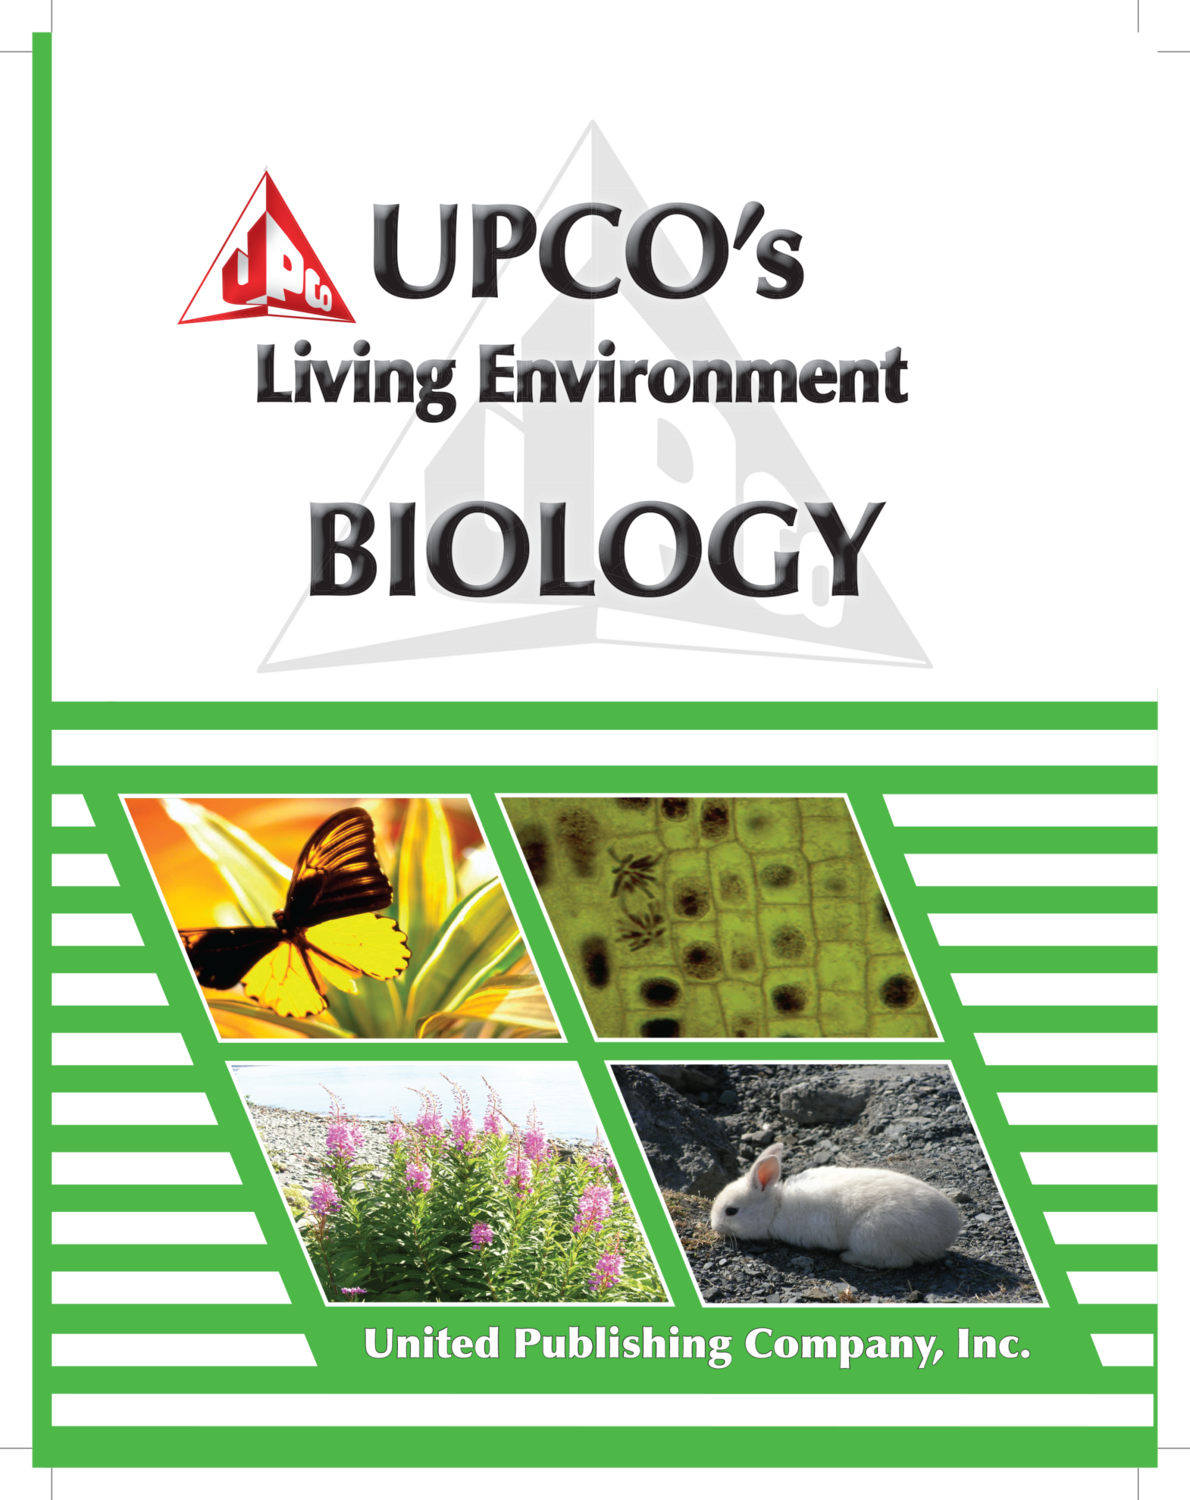 UPCO's Living Environment - Biology